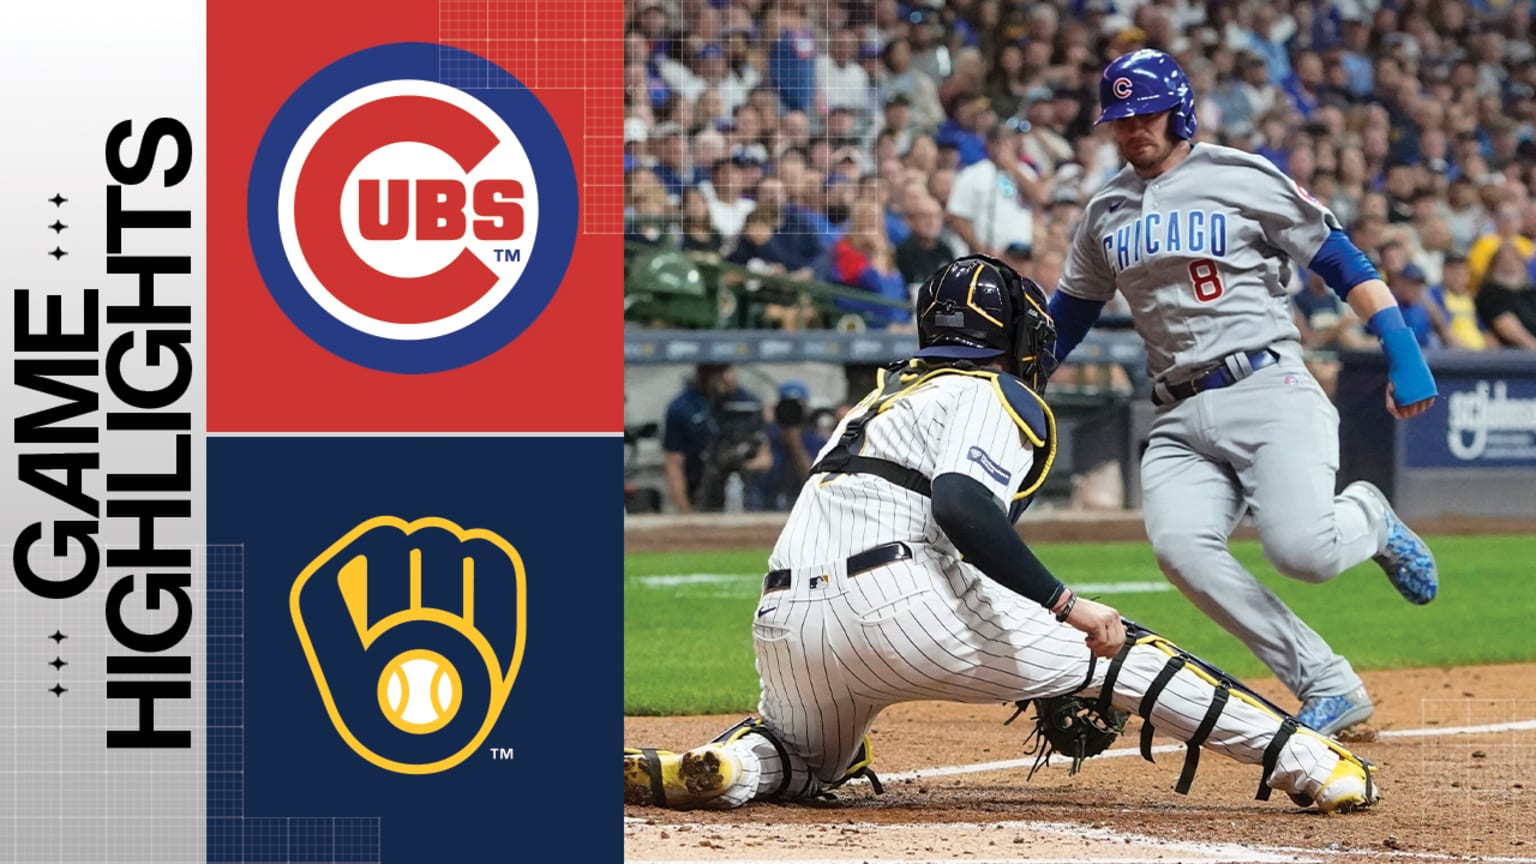 Game Highlights: Cubs Beat Braves Behind Complete Team Effort